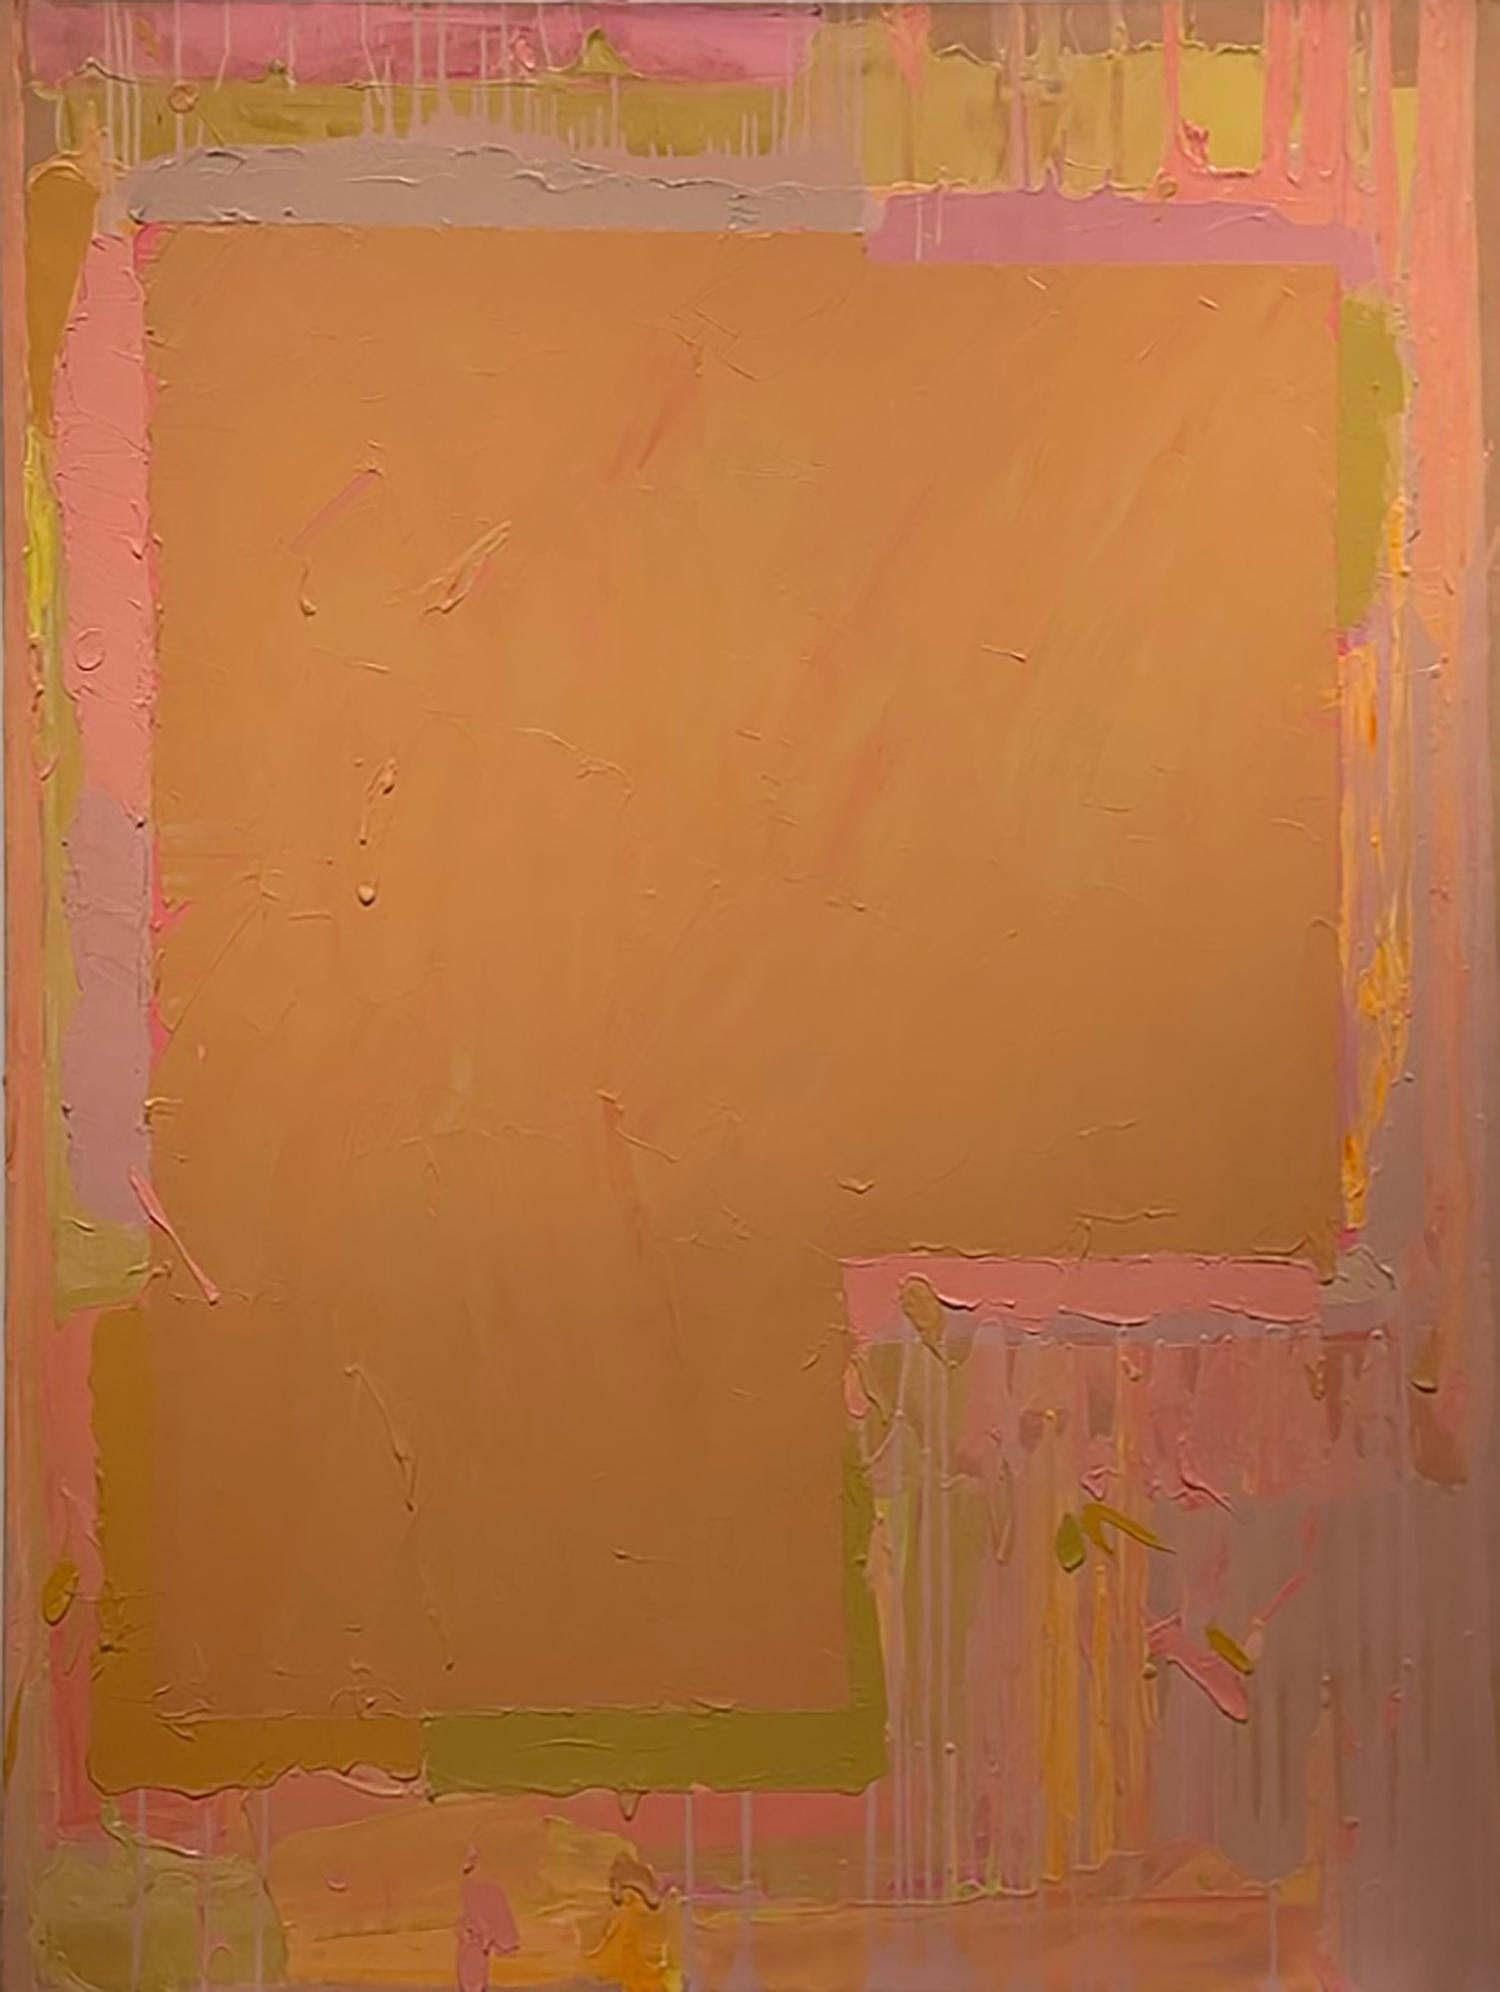 Abstract Painting John Hoyland - Ormolu